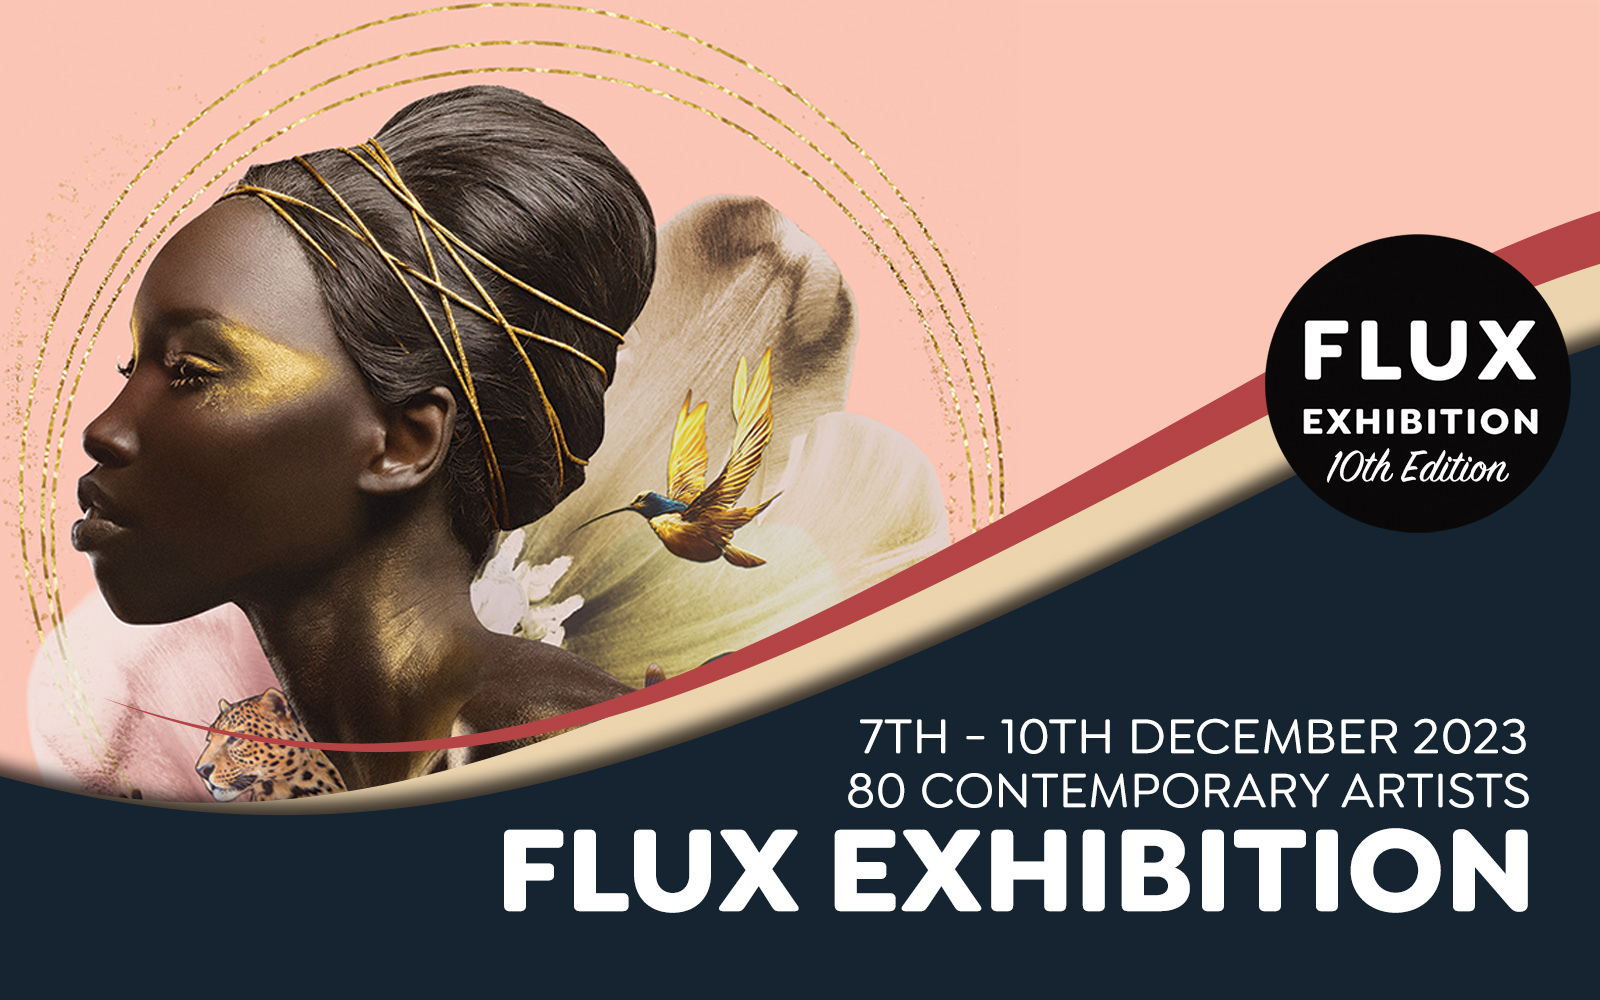 FLUX Exhibition, London, England, United Kingdom